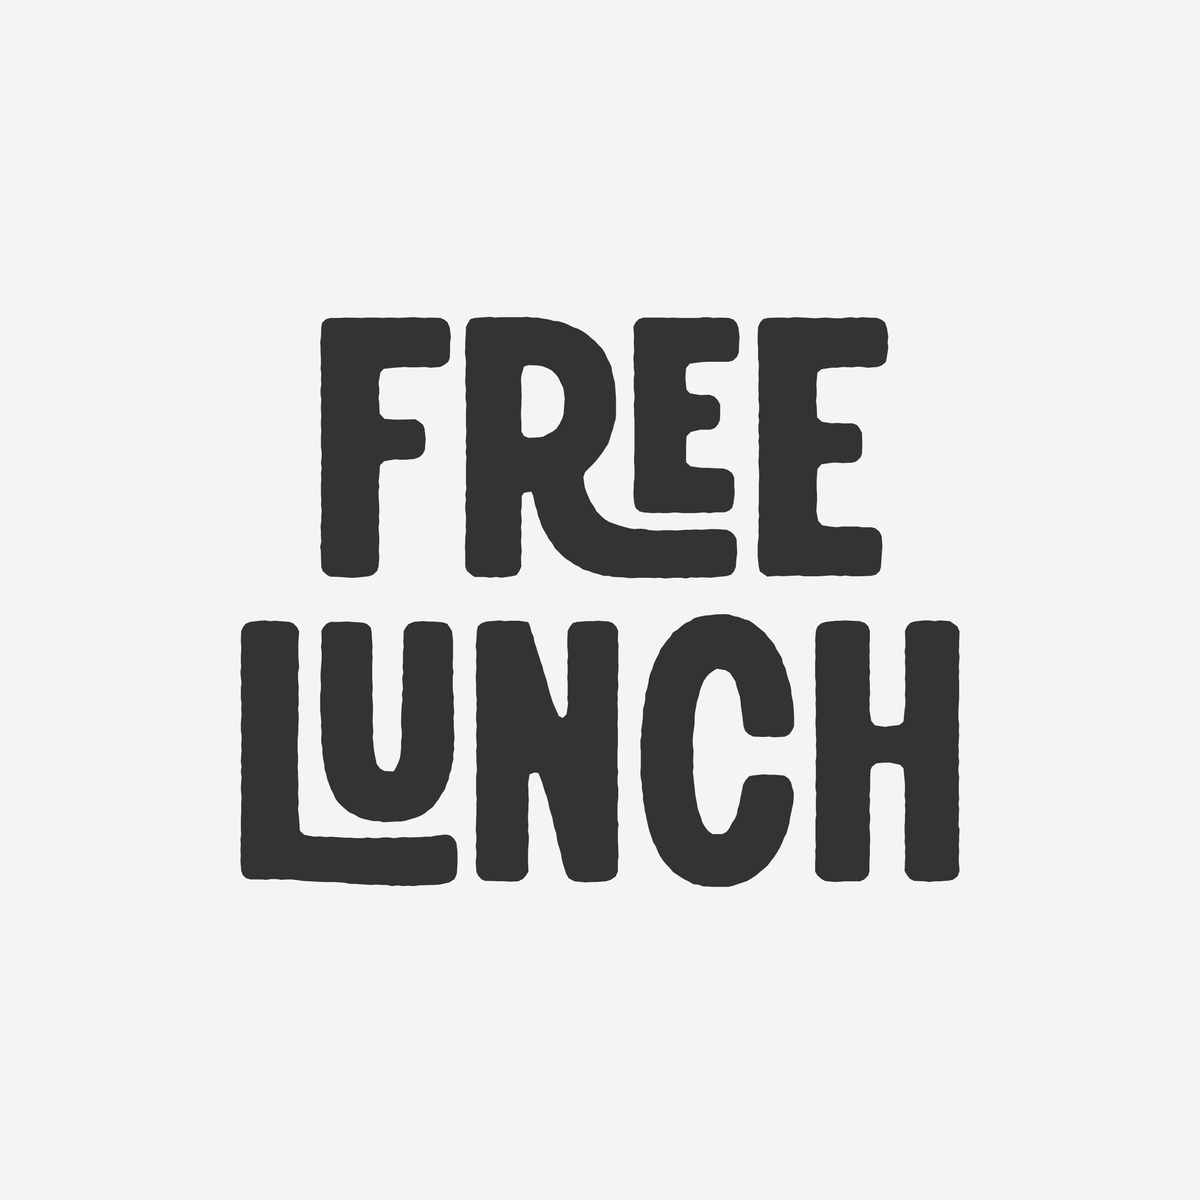 Lunch menu logo and badge design Royalty Free Vector Image